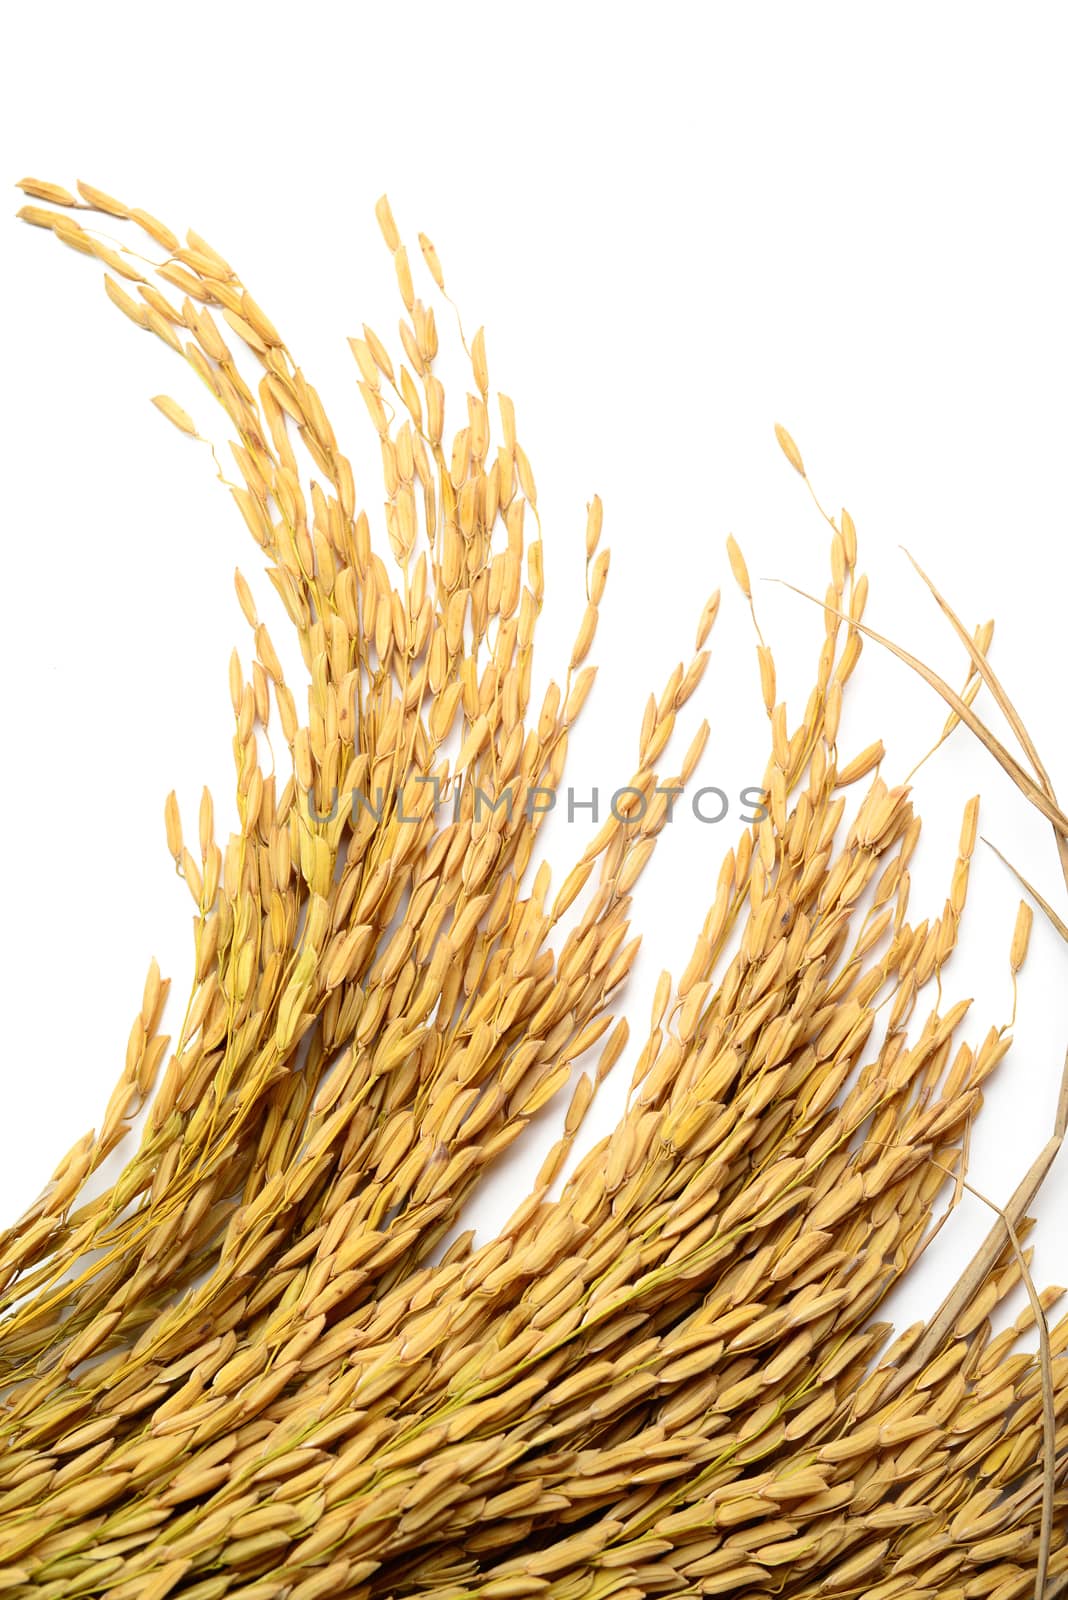 Rice grain by antpkr